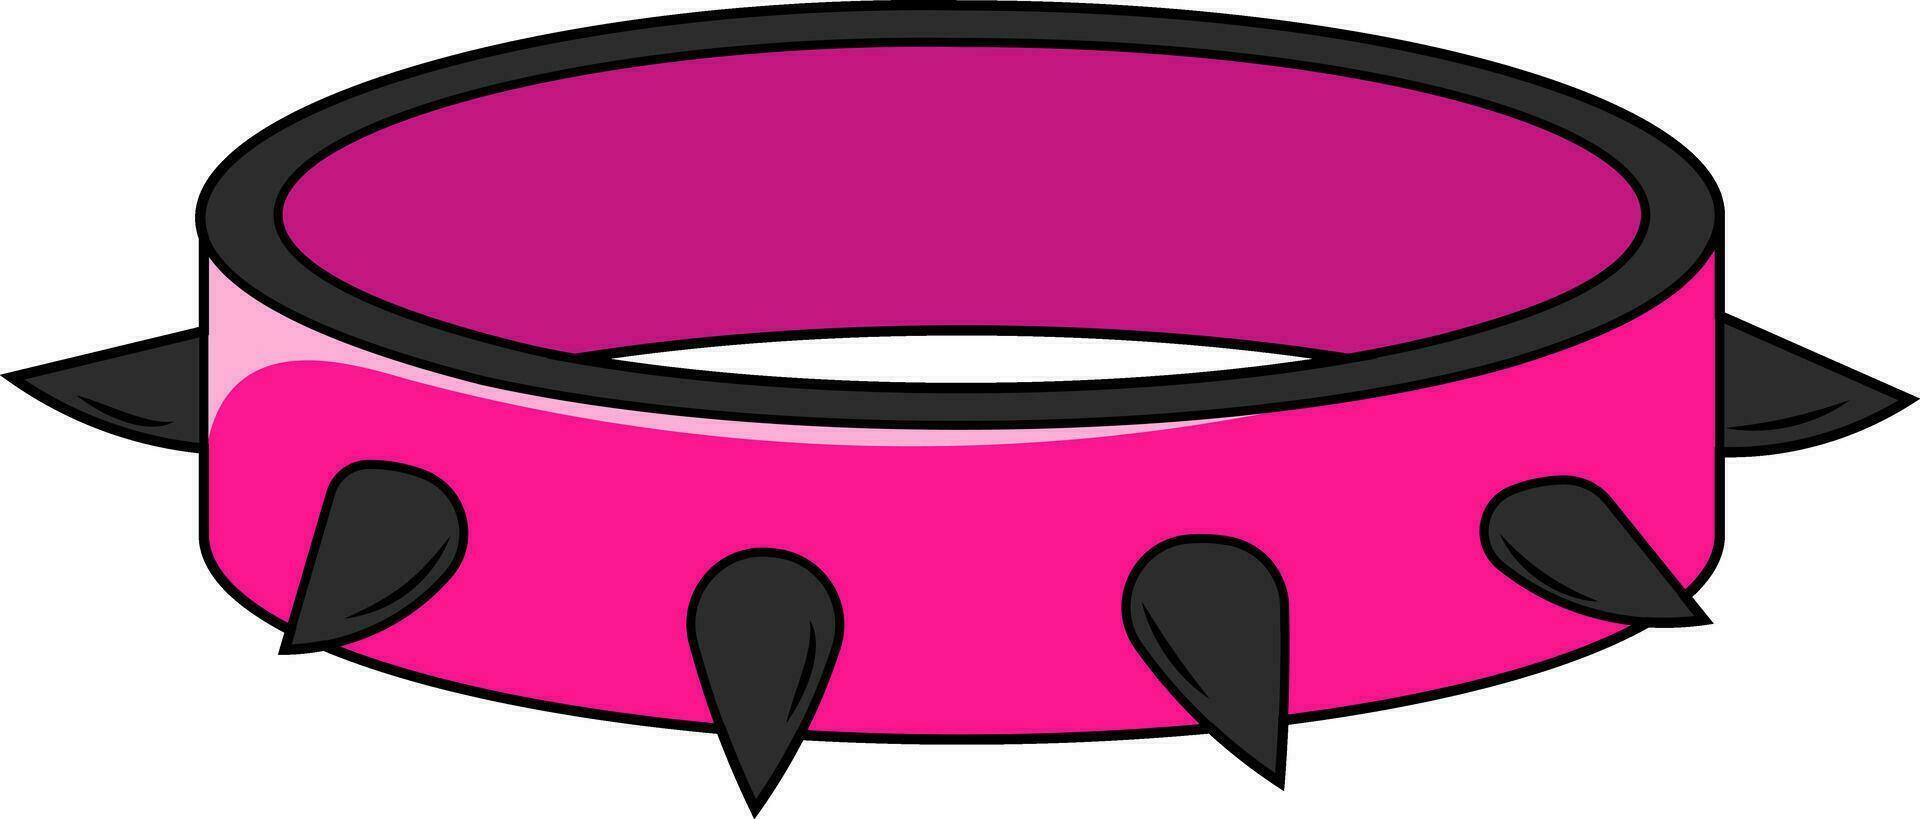 emo collar con Picos, un accesorio para atractivo rock en de moda 2000 colores negro con ácido rosado en transparente antecedentes vector